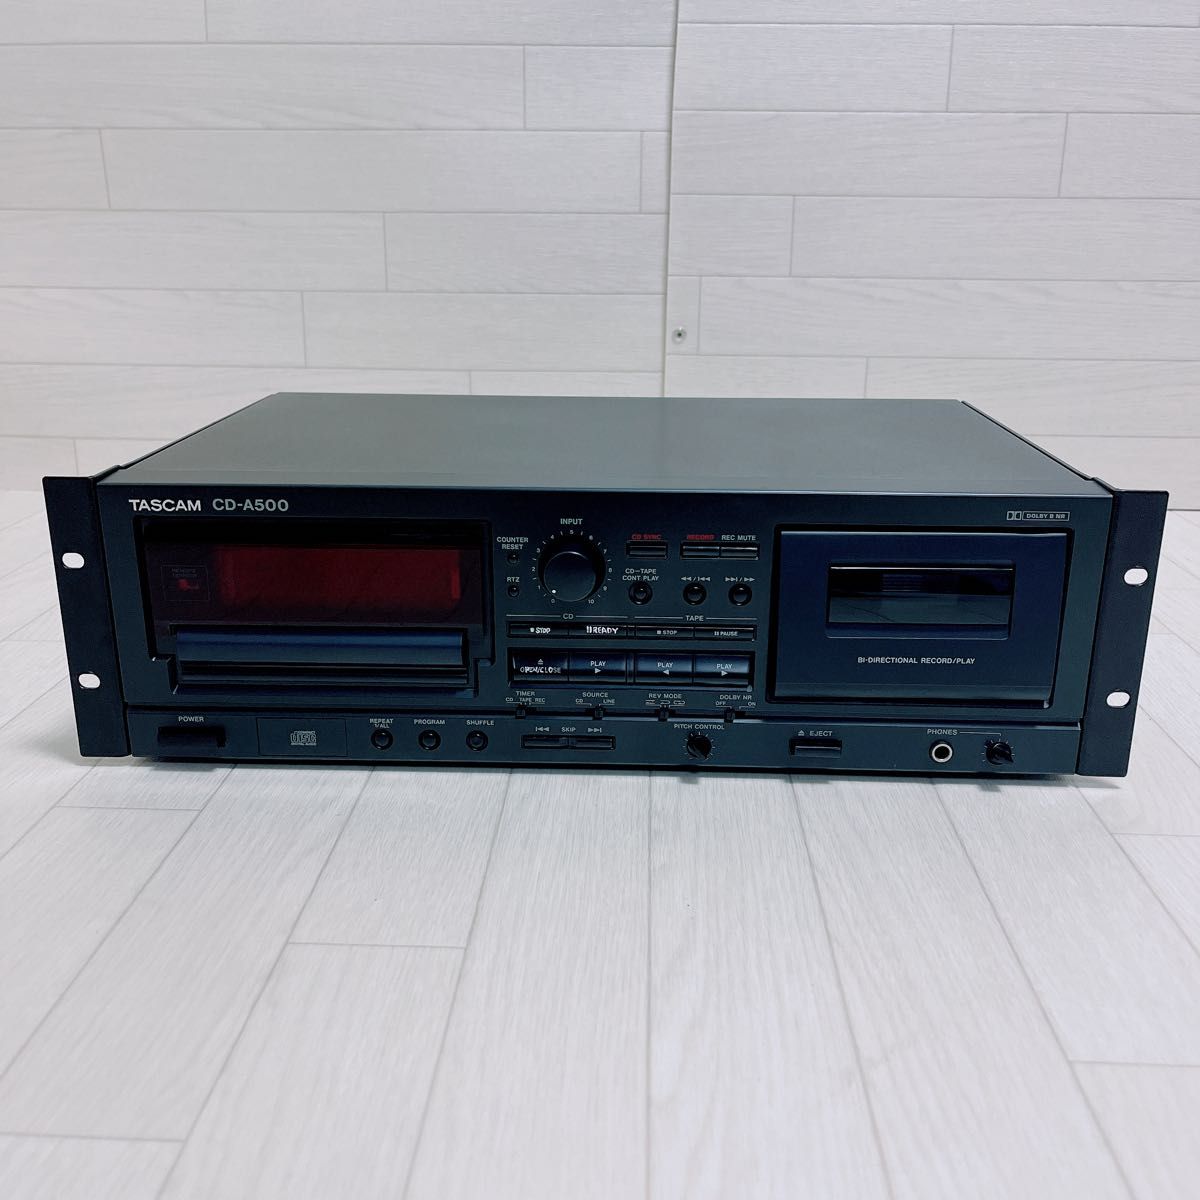 TASCAM タスカム TEAC CD-A500 業務用CDプレーヤー 良品